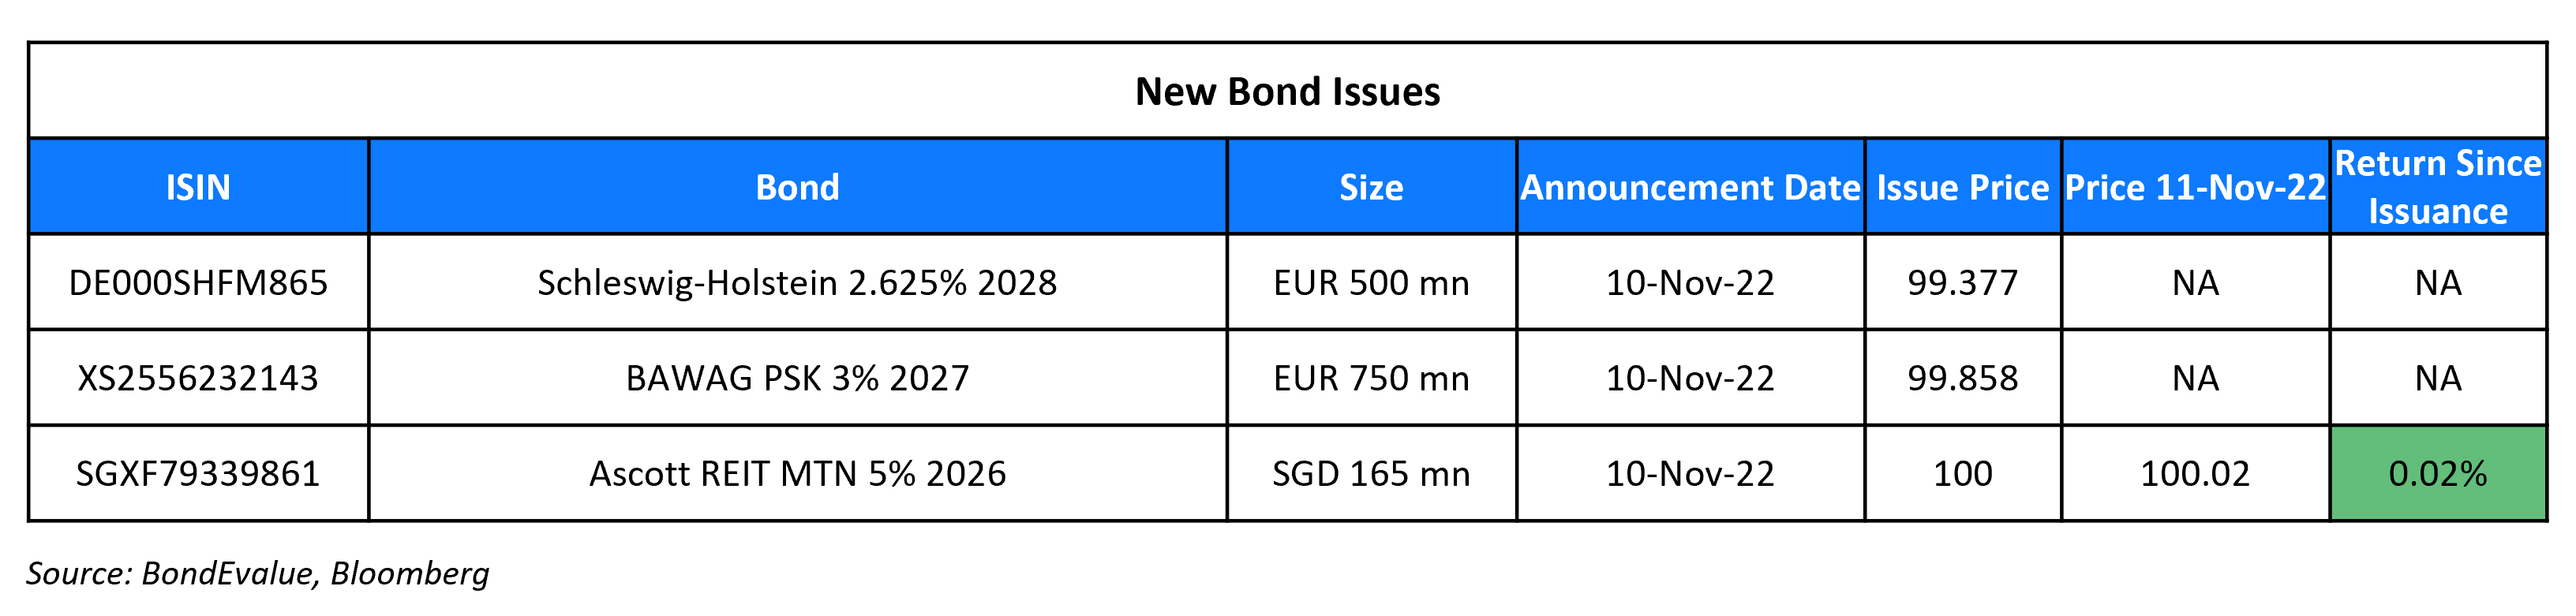 New Bond Issues 11 Nov 22